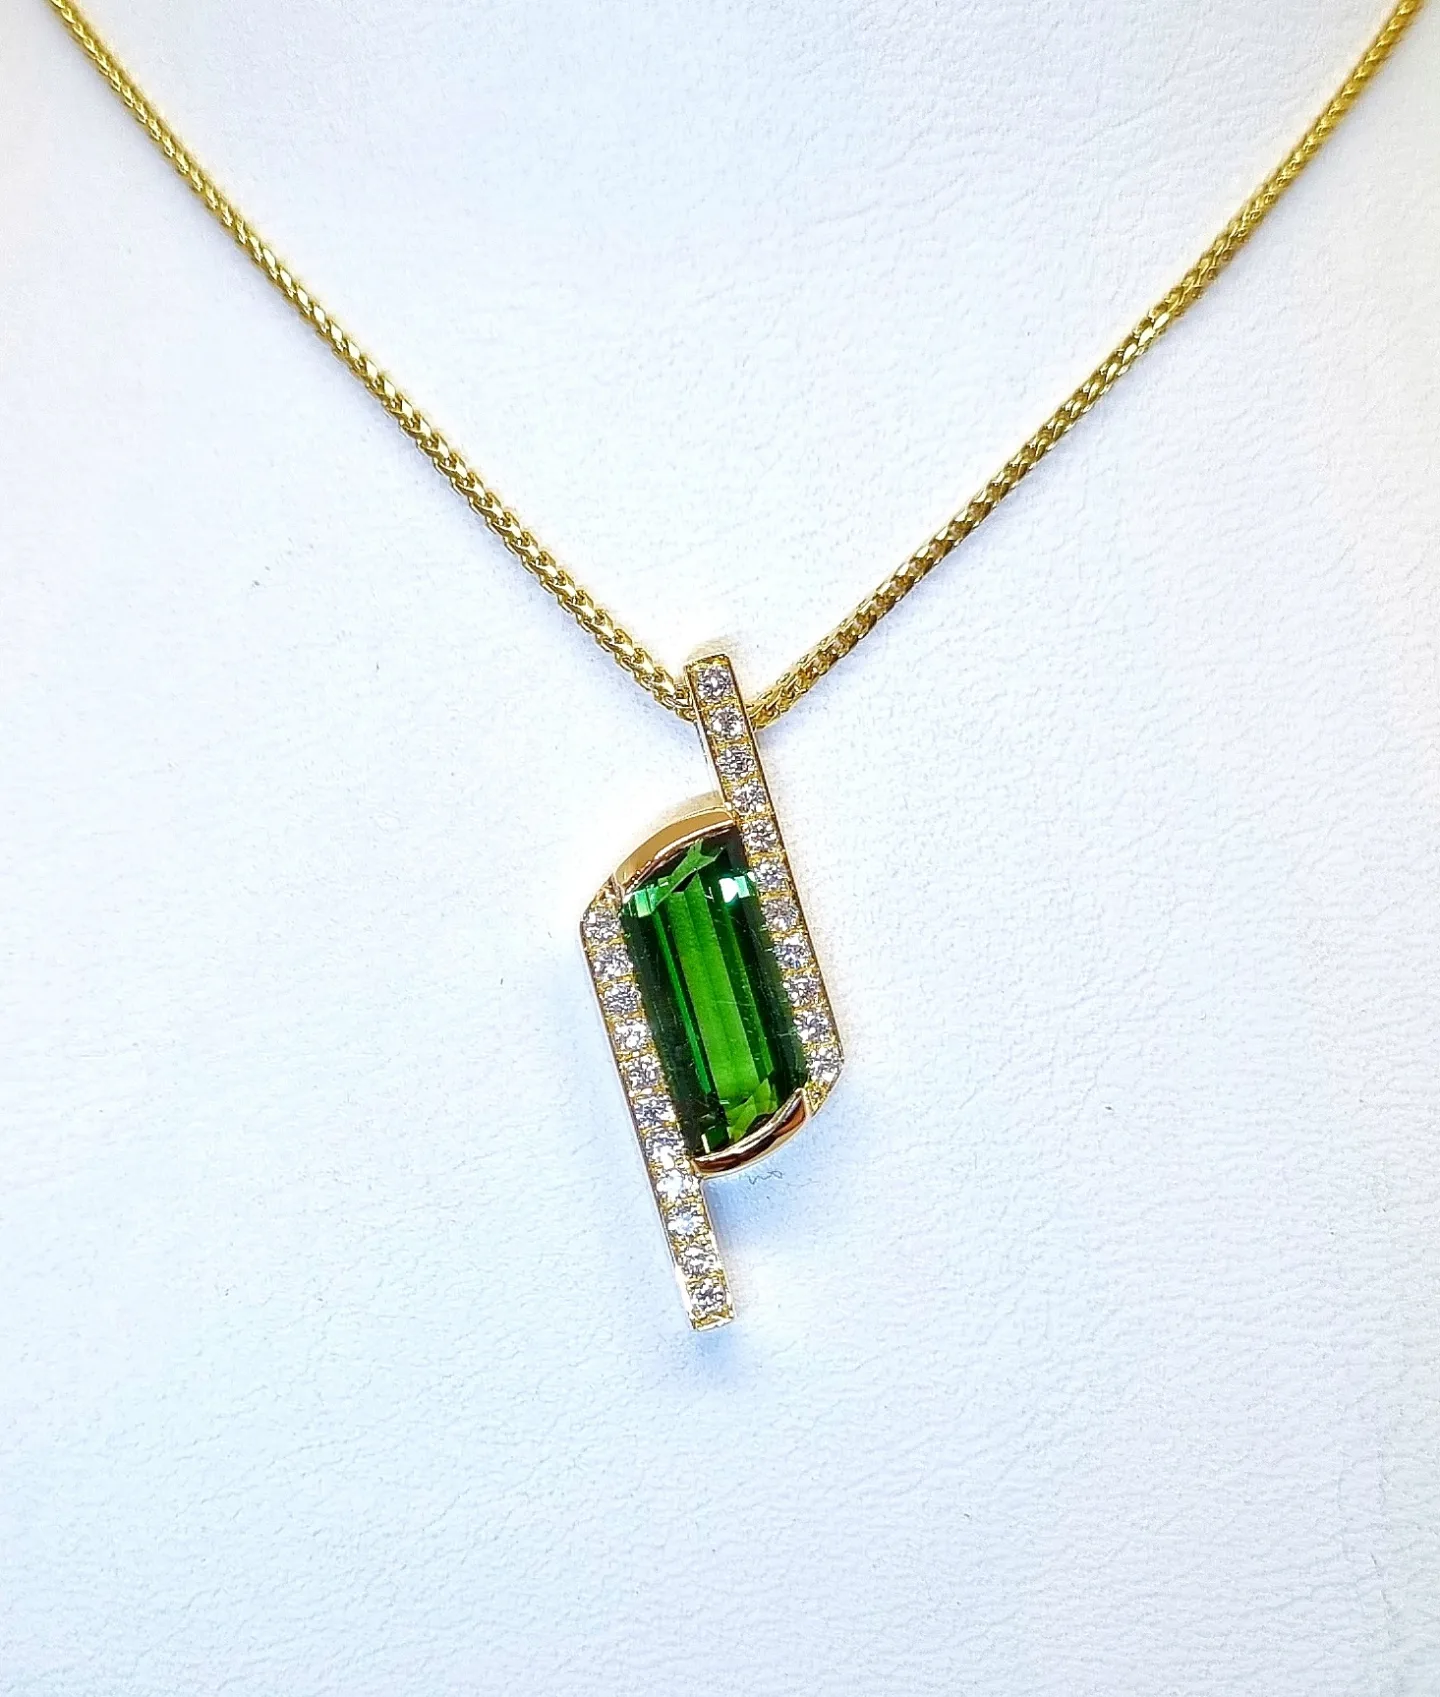 Georgeous Green Tourmaline and diamond pendant